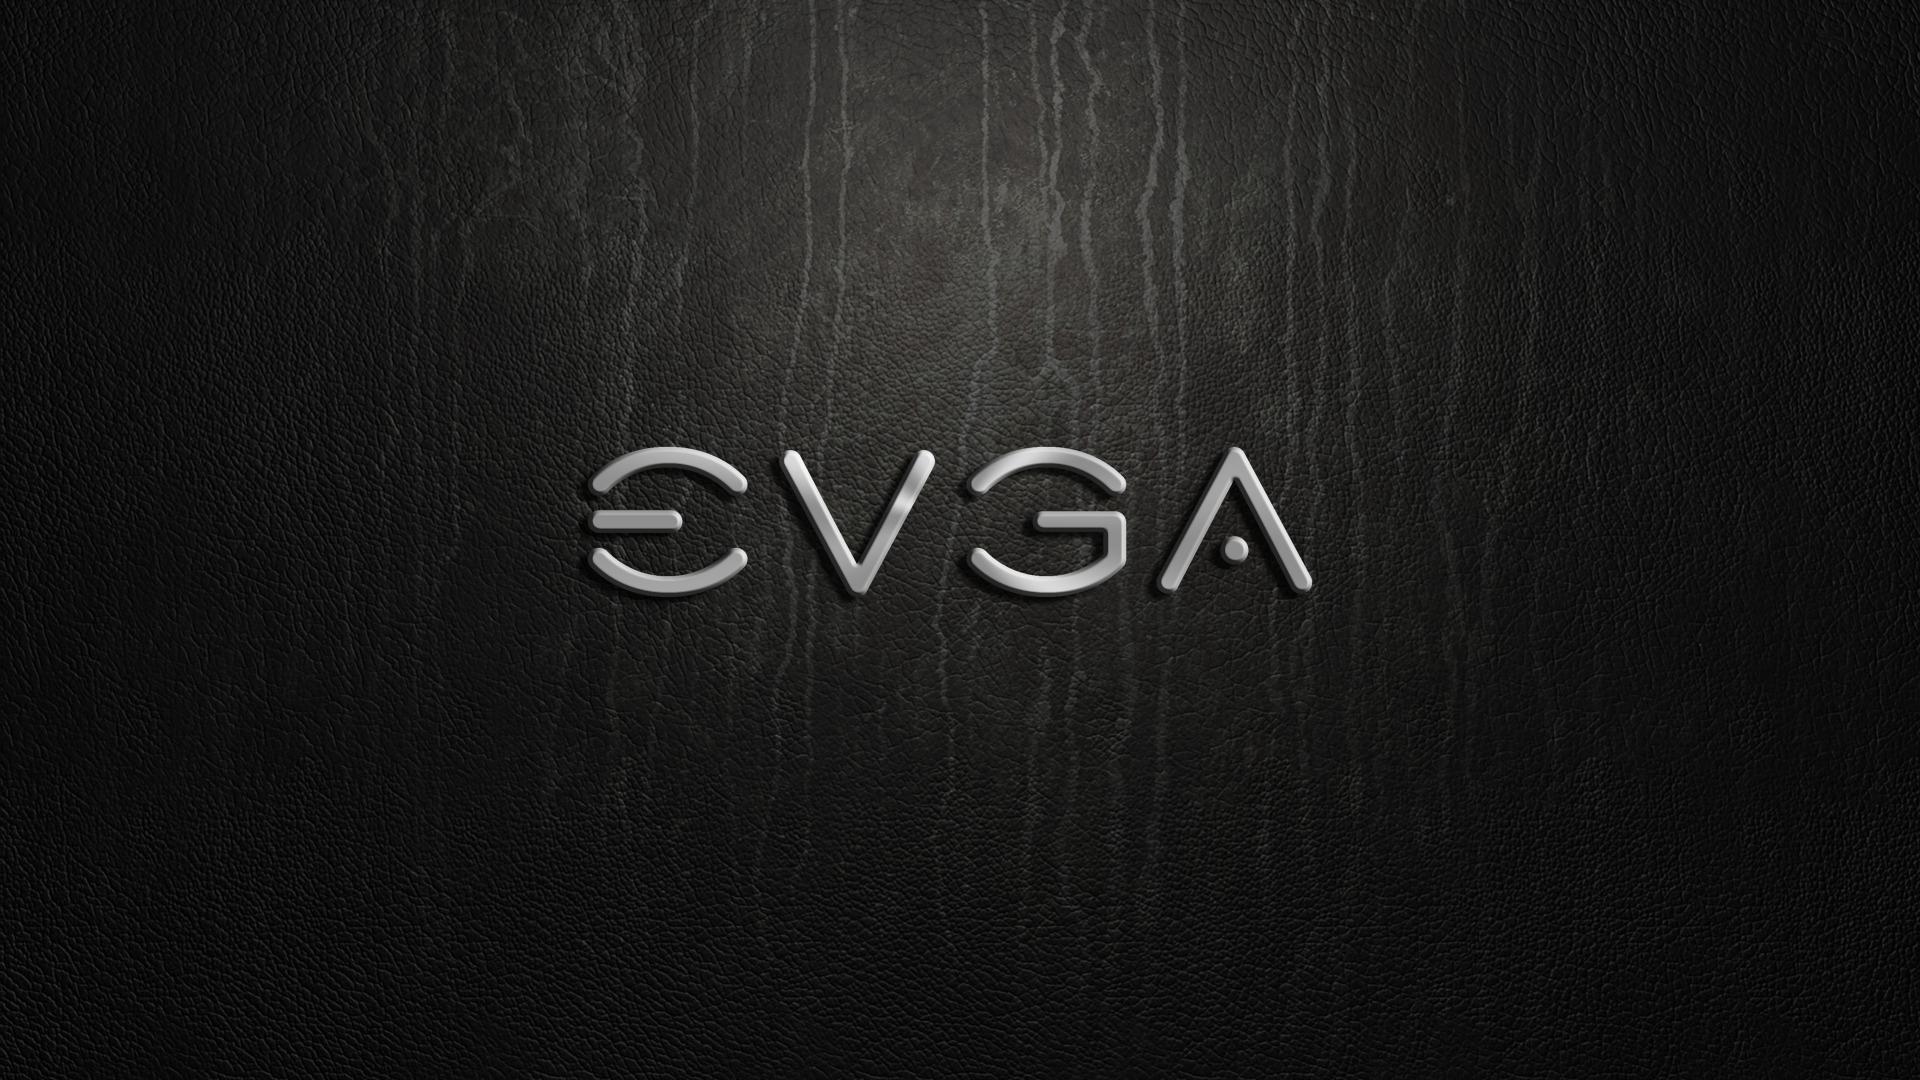 EVGA wallpaper #